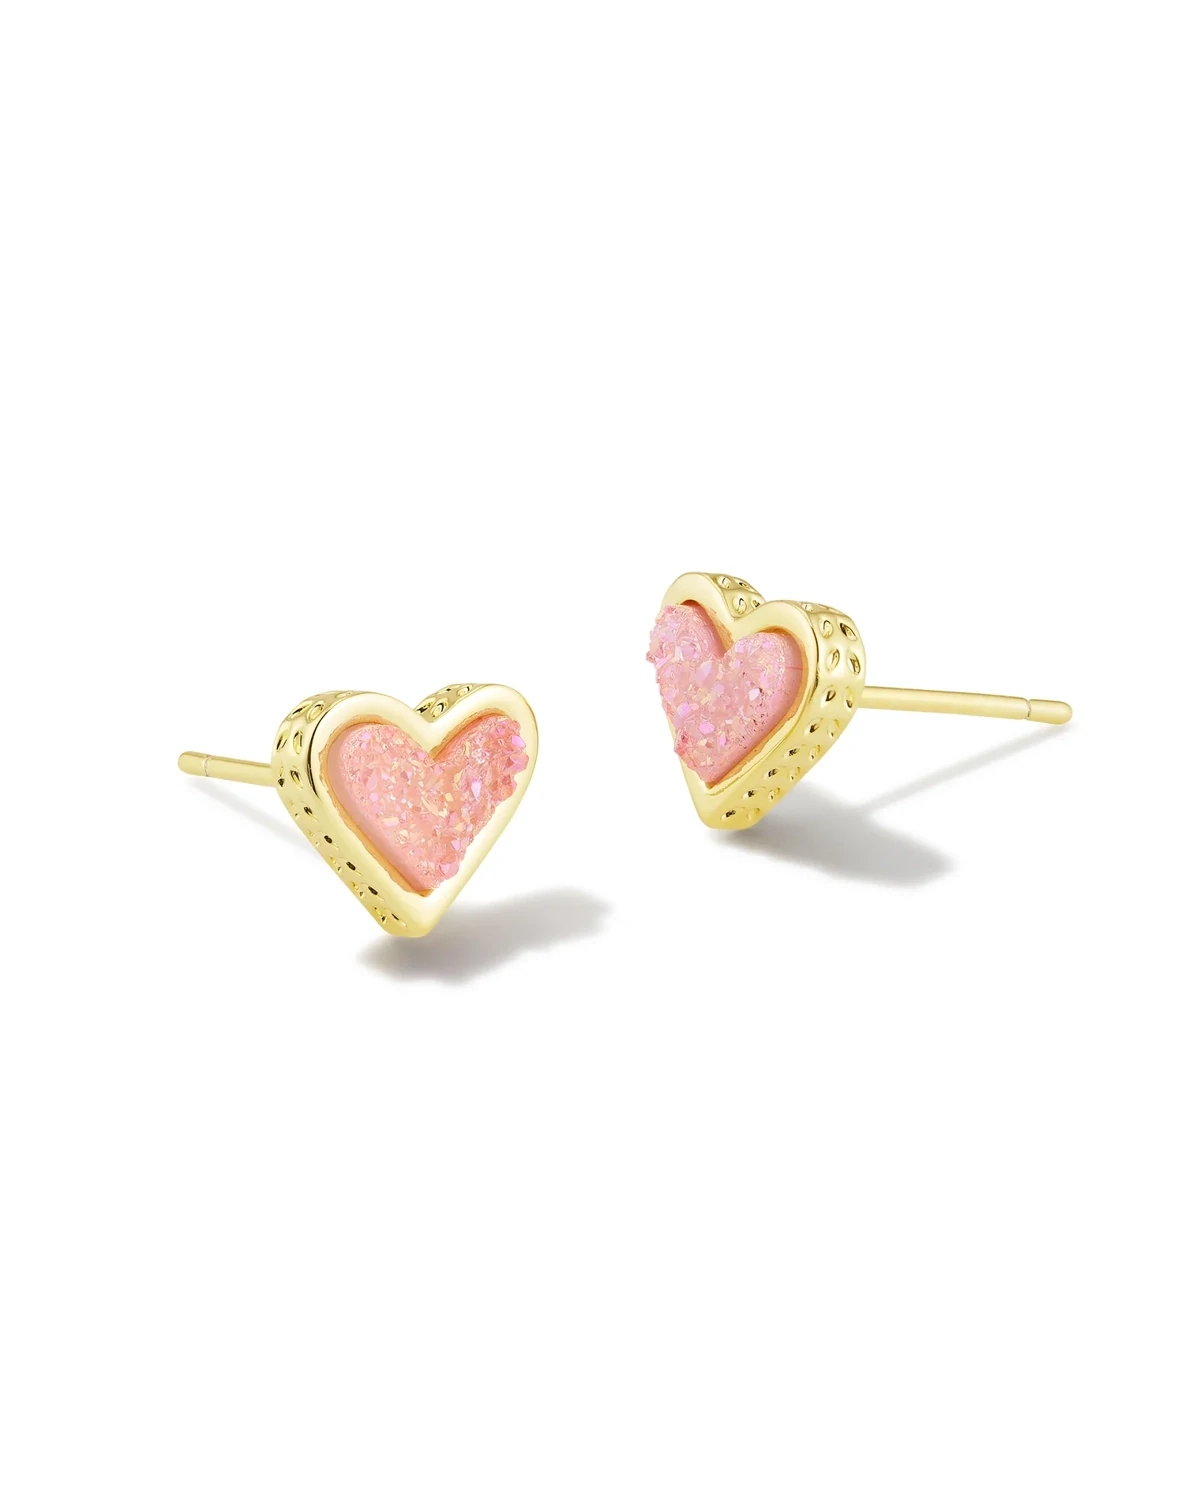 Kendra Scott Ari Heart Earrings, Gold/Light Pink Druzy